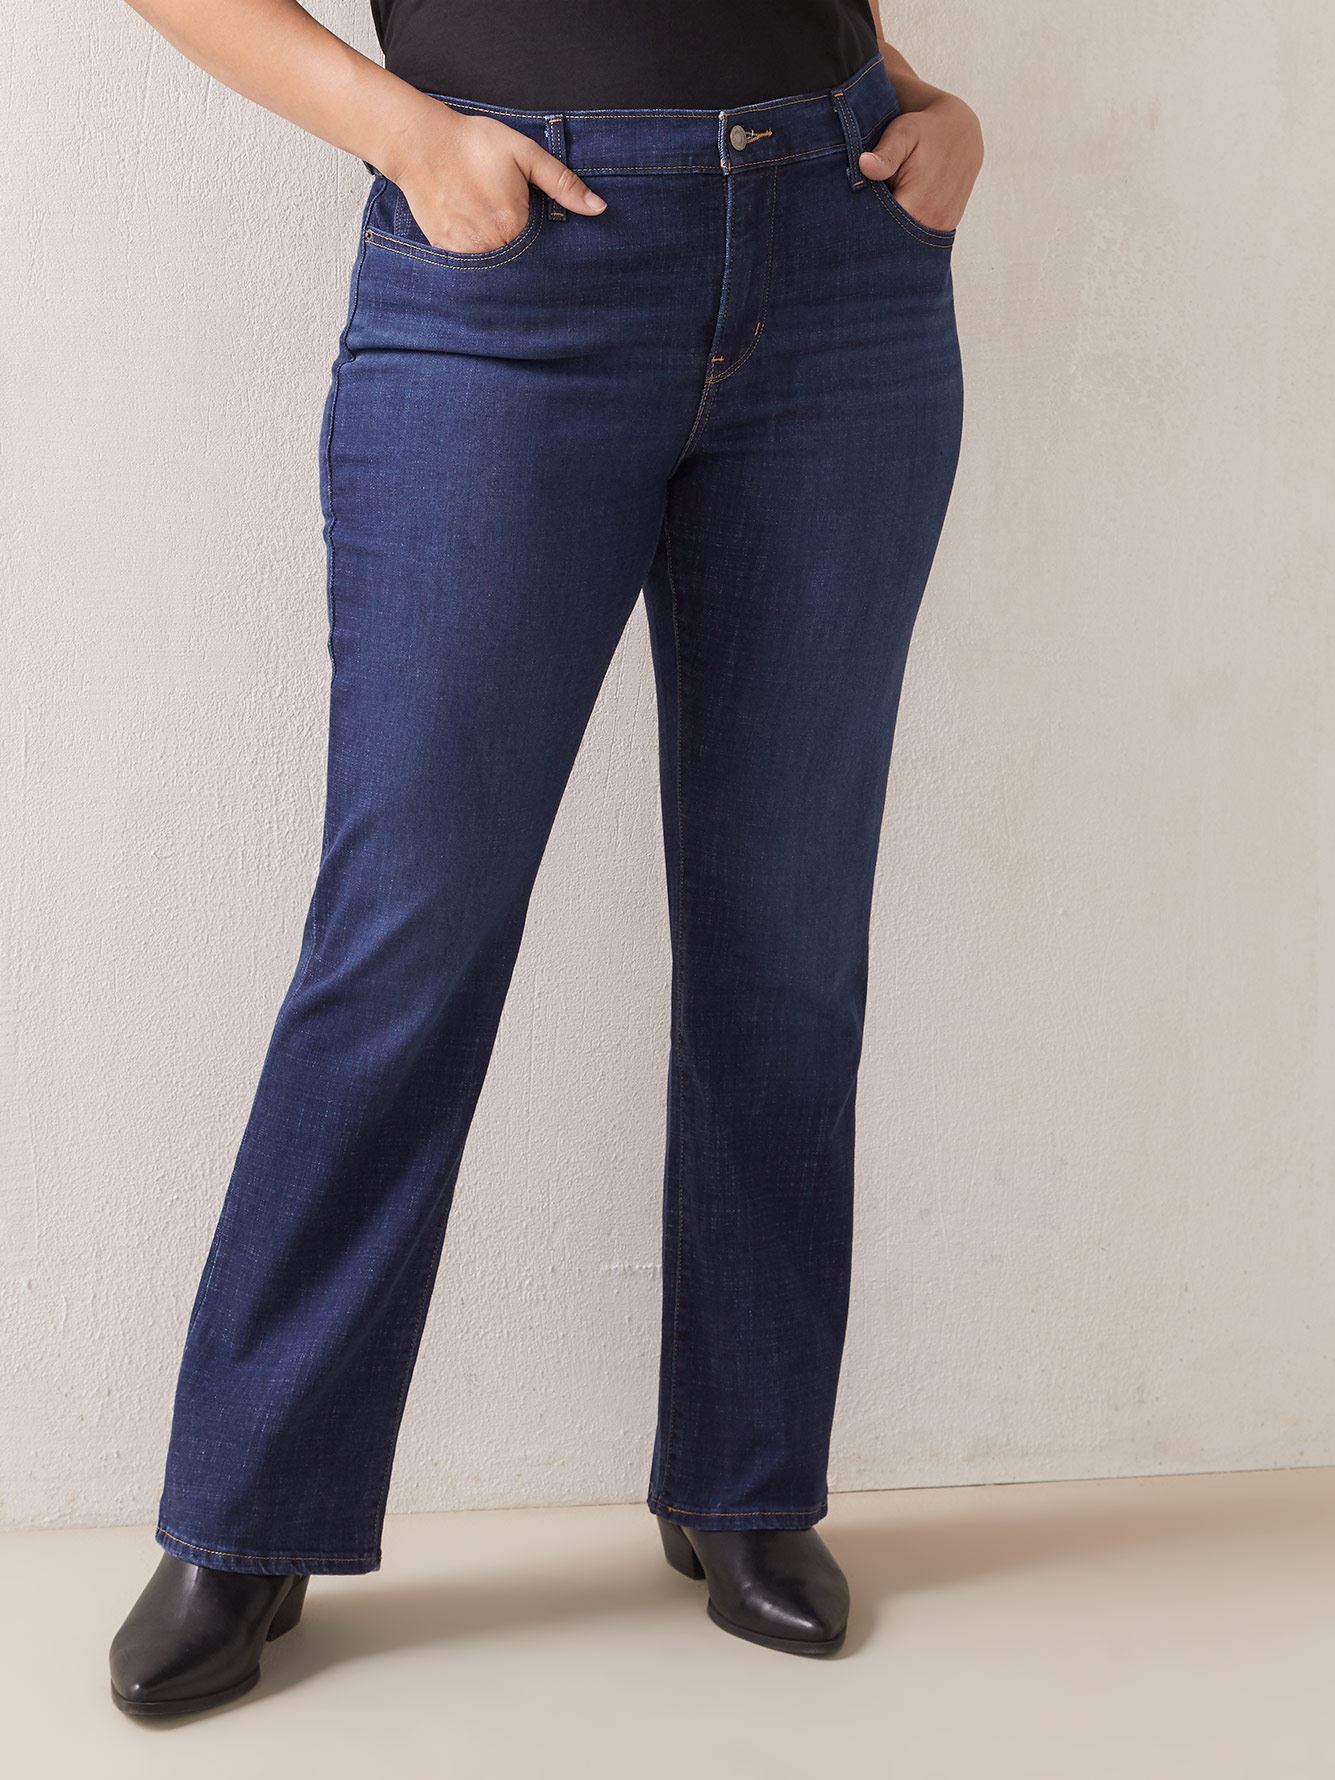 Buy > levis 315 shaping boot cut women's jeans > in stock